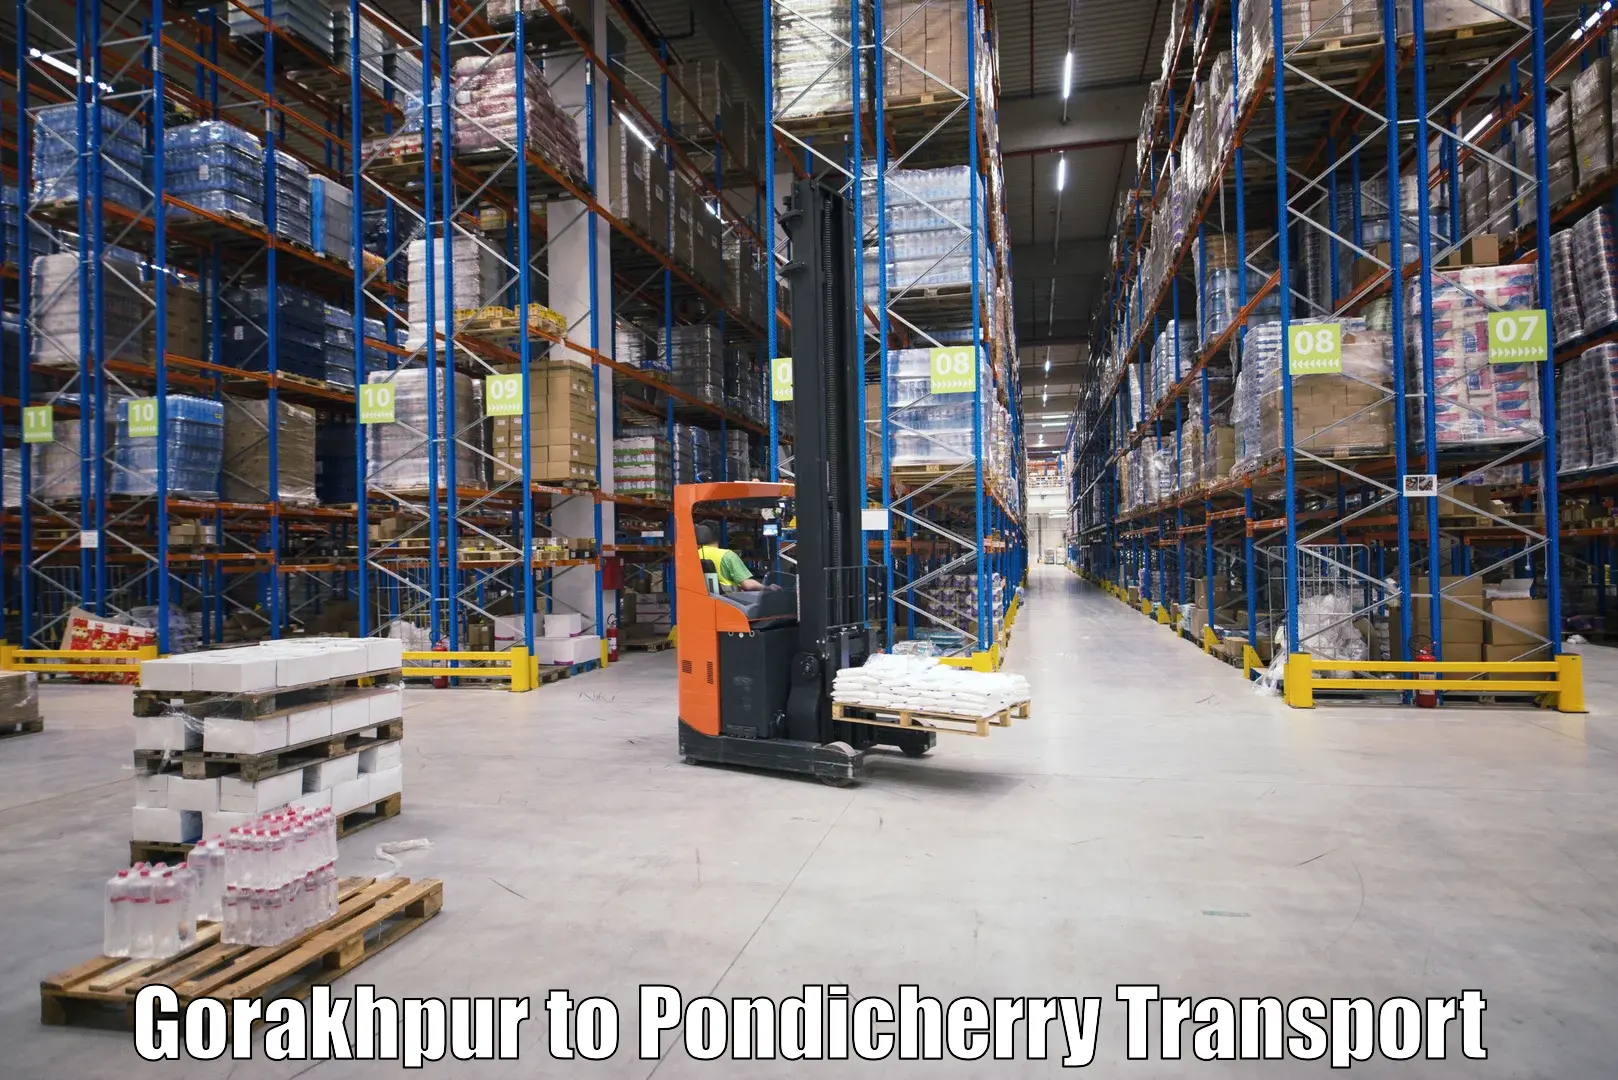 Delivery service Gorakhpur to Pondicherry